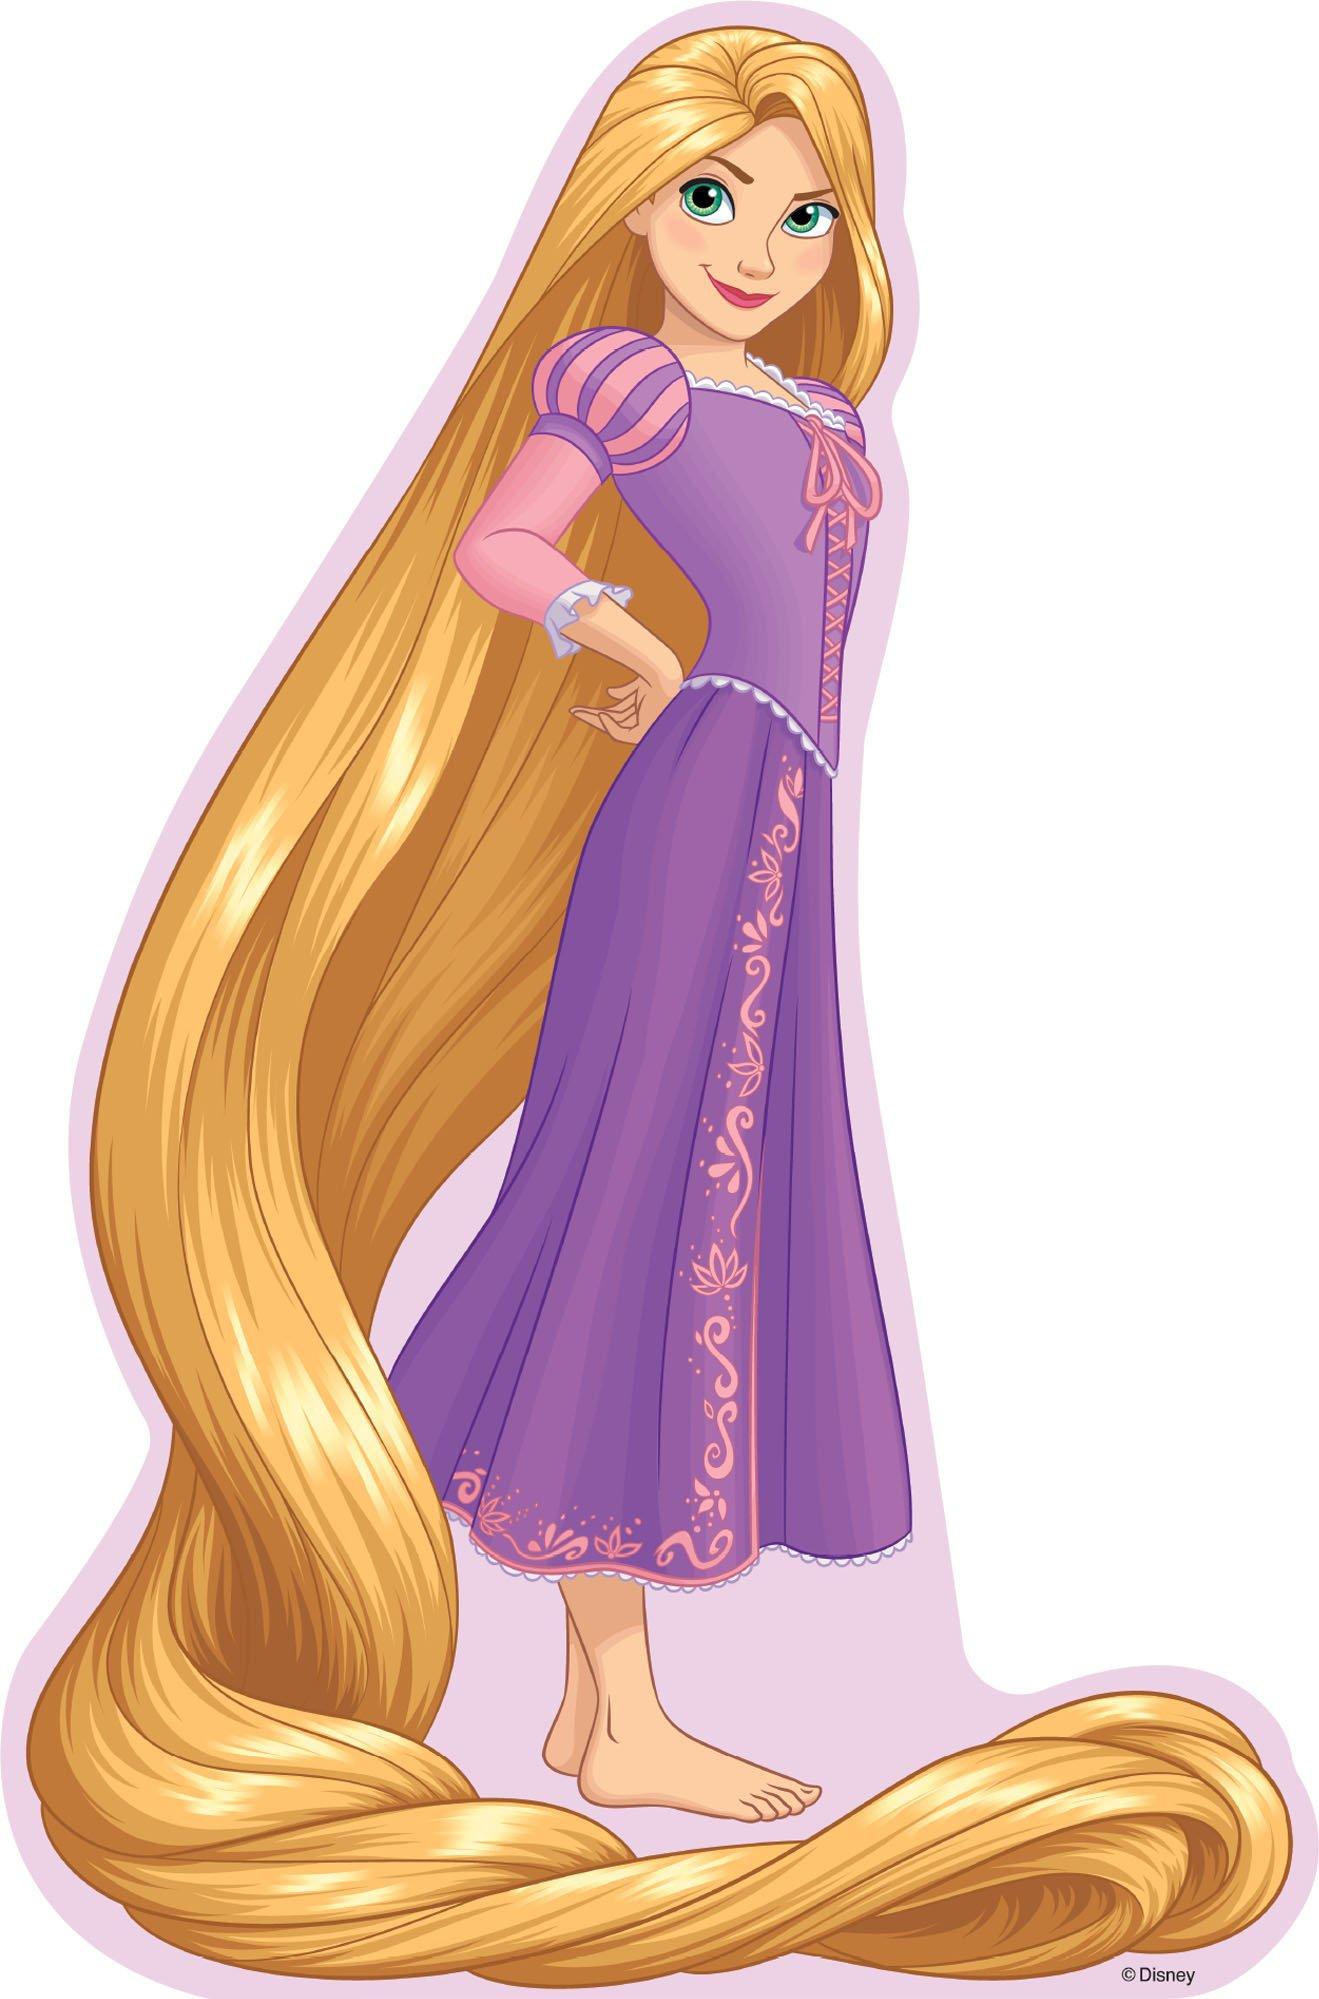 ONE 1 Tangled Rapunzel Standee, Rapunzel Cutout, Tangled Cutout